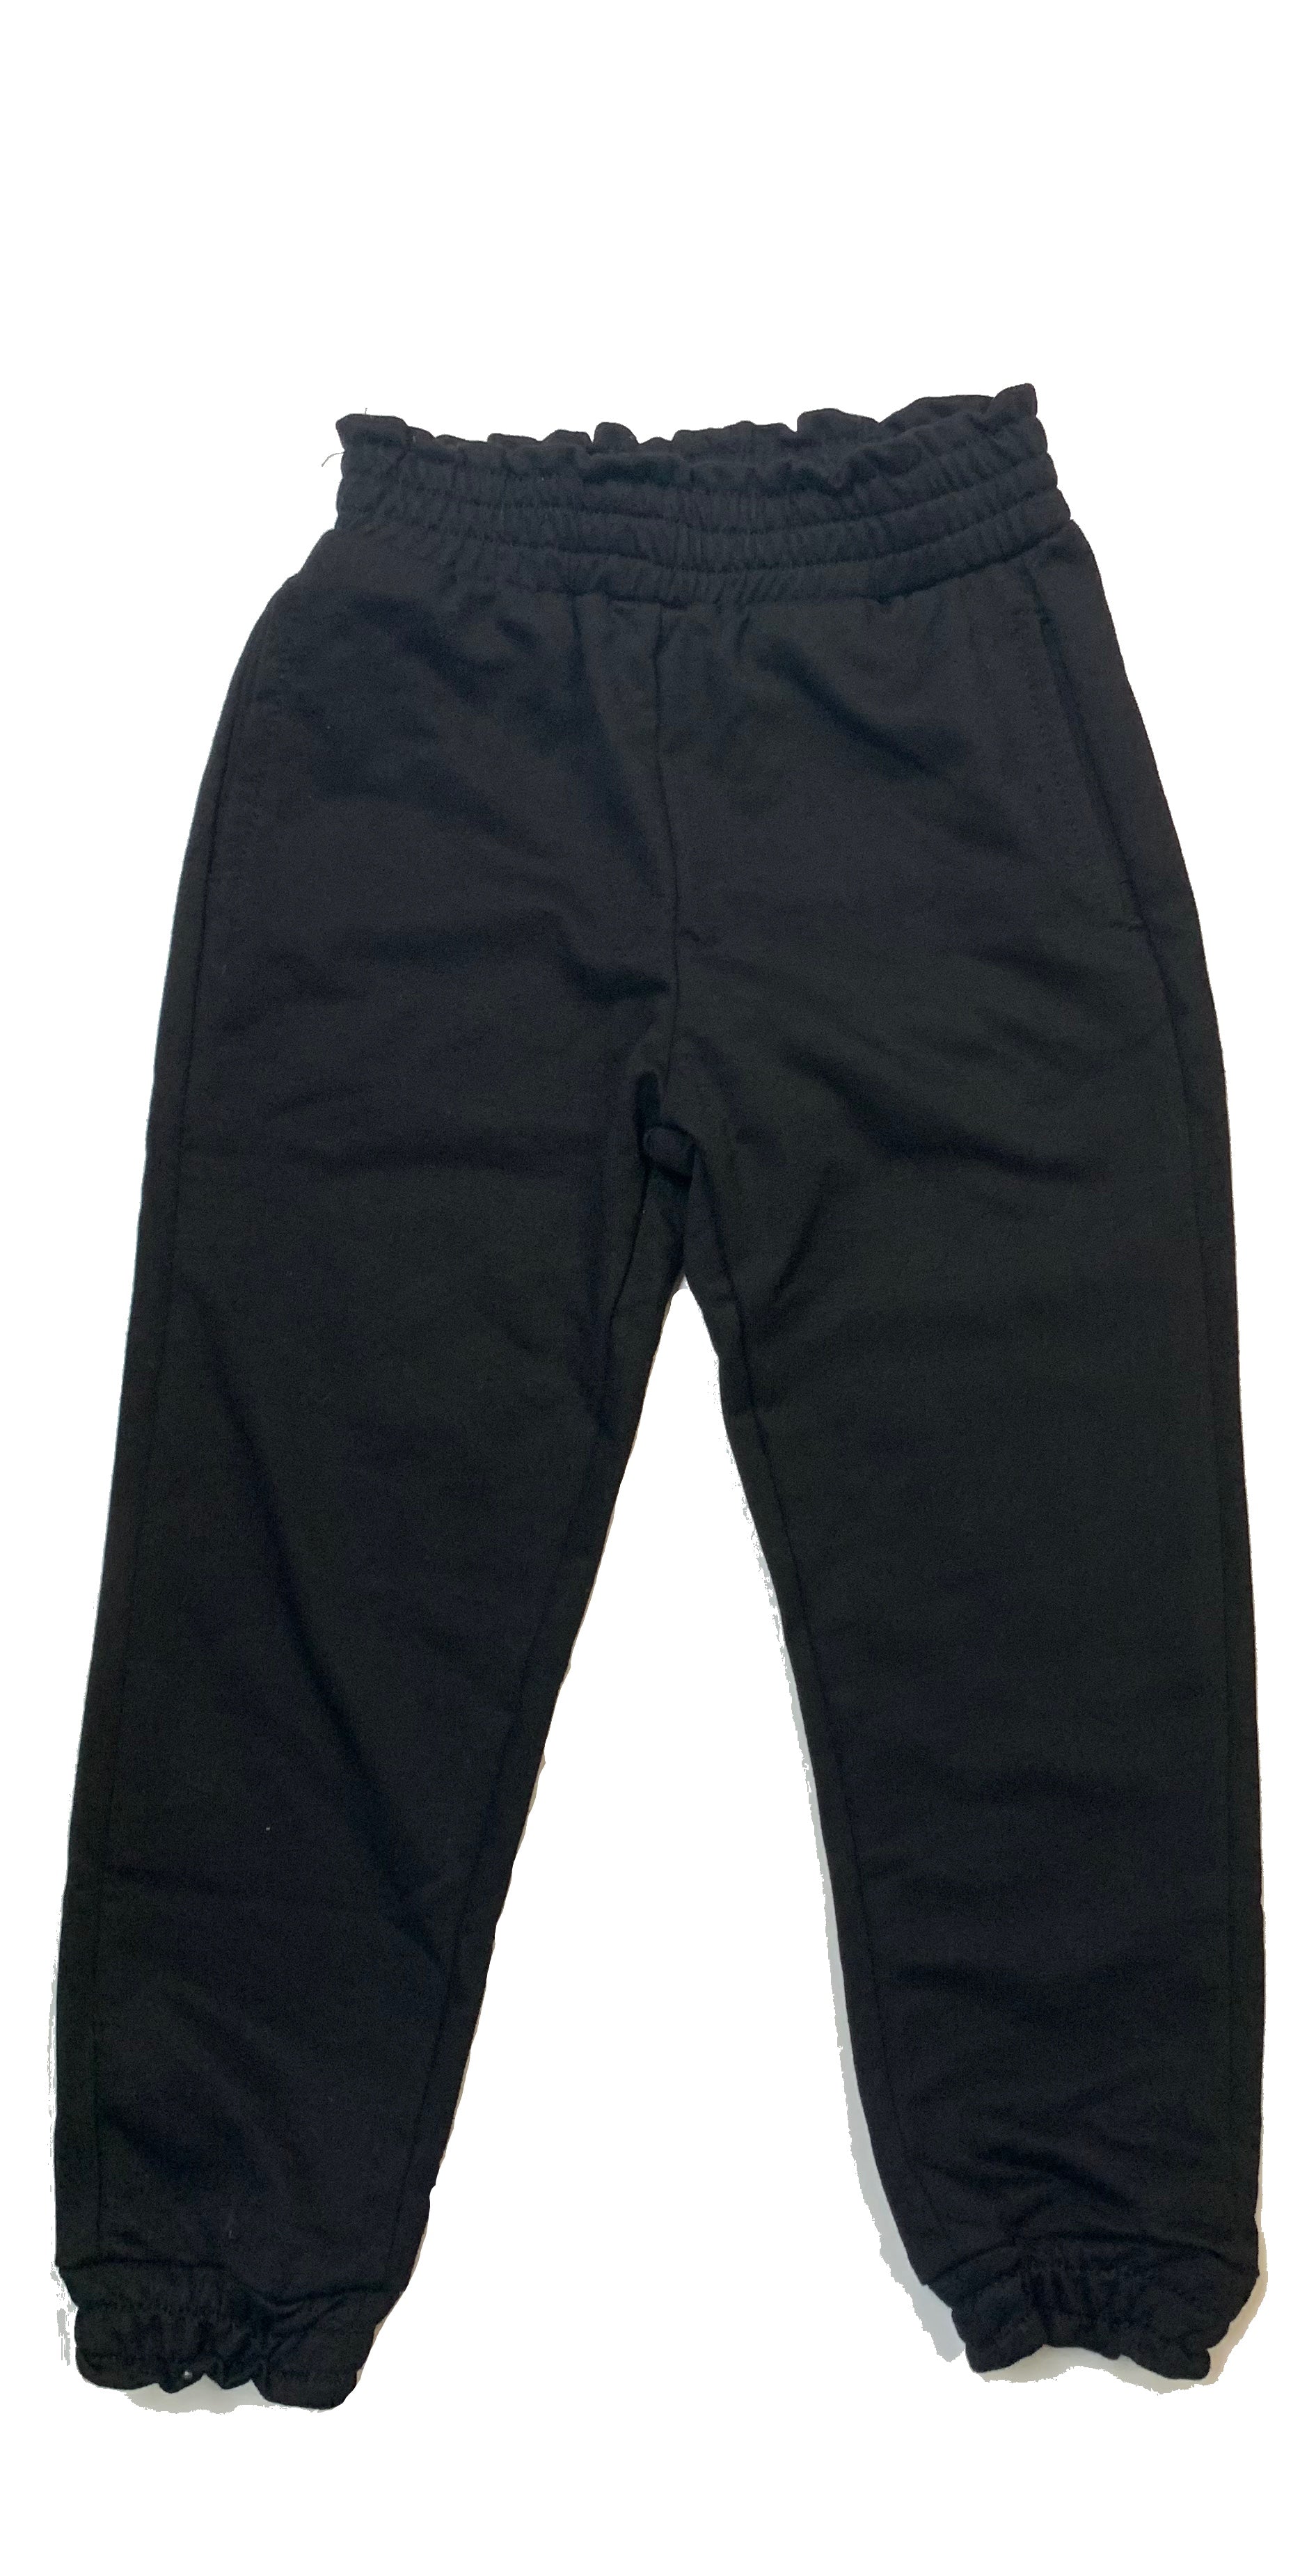 M.I.D - pantalon noir